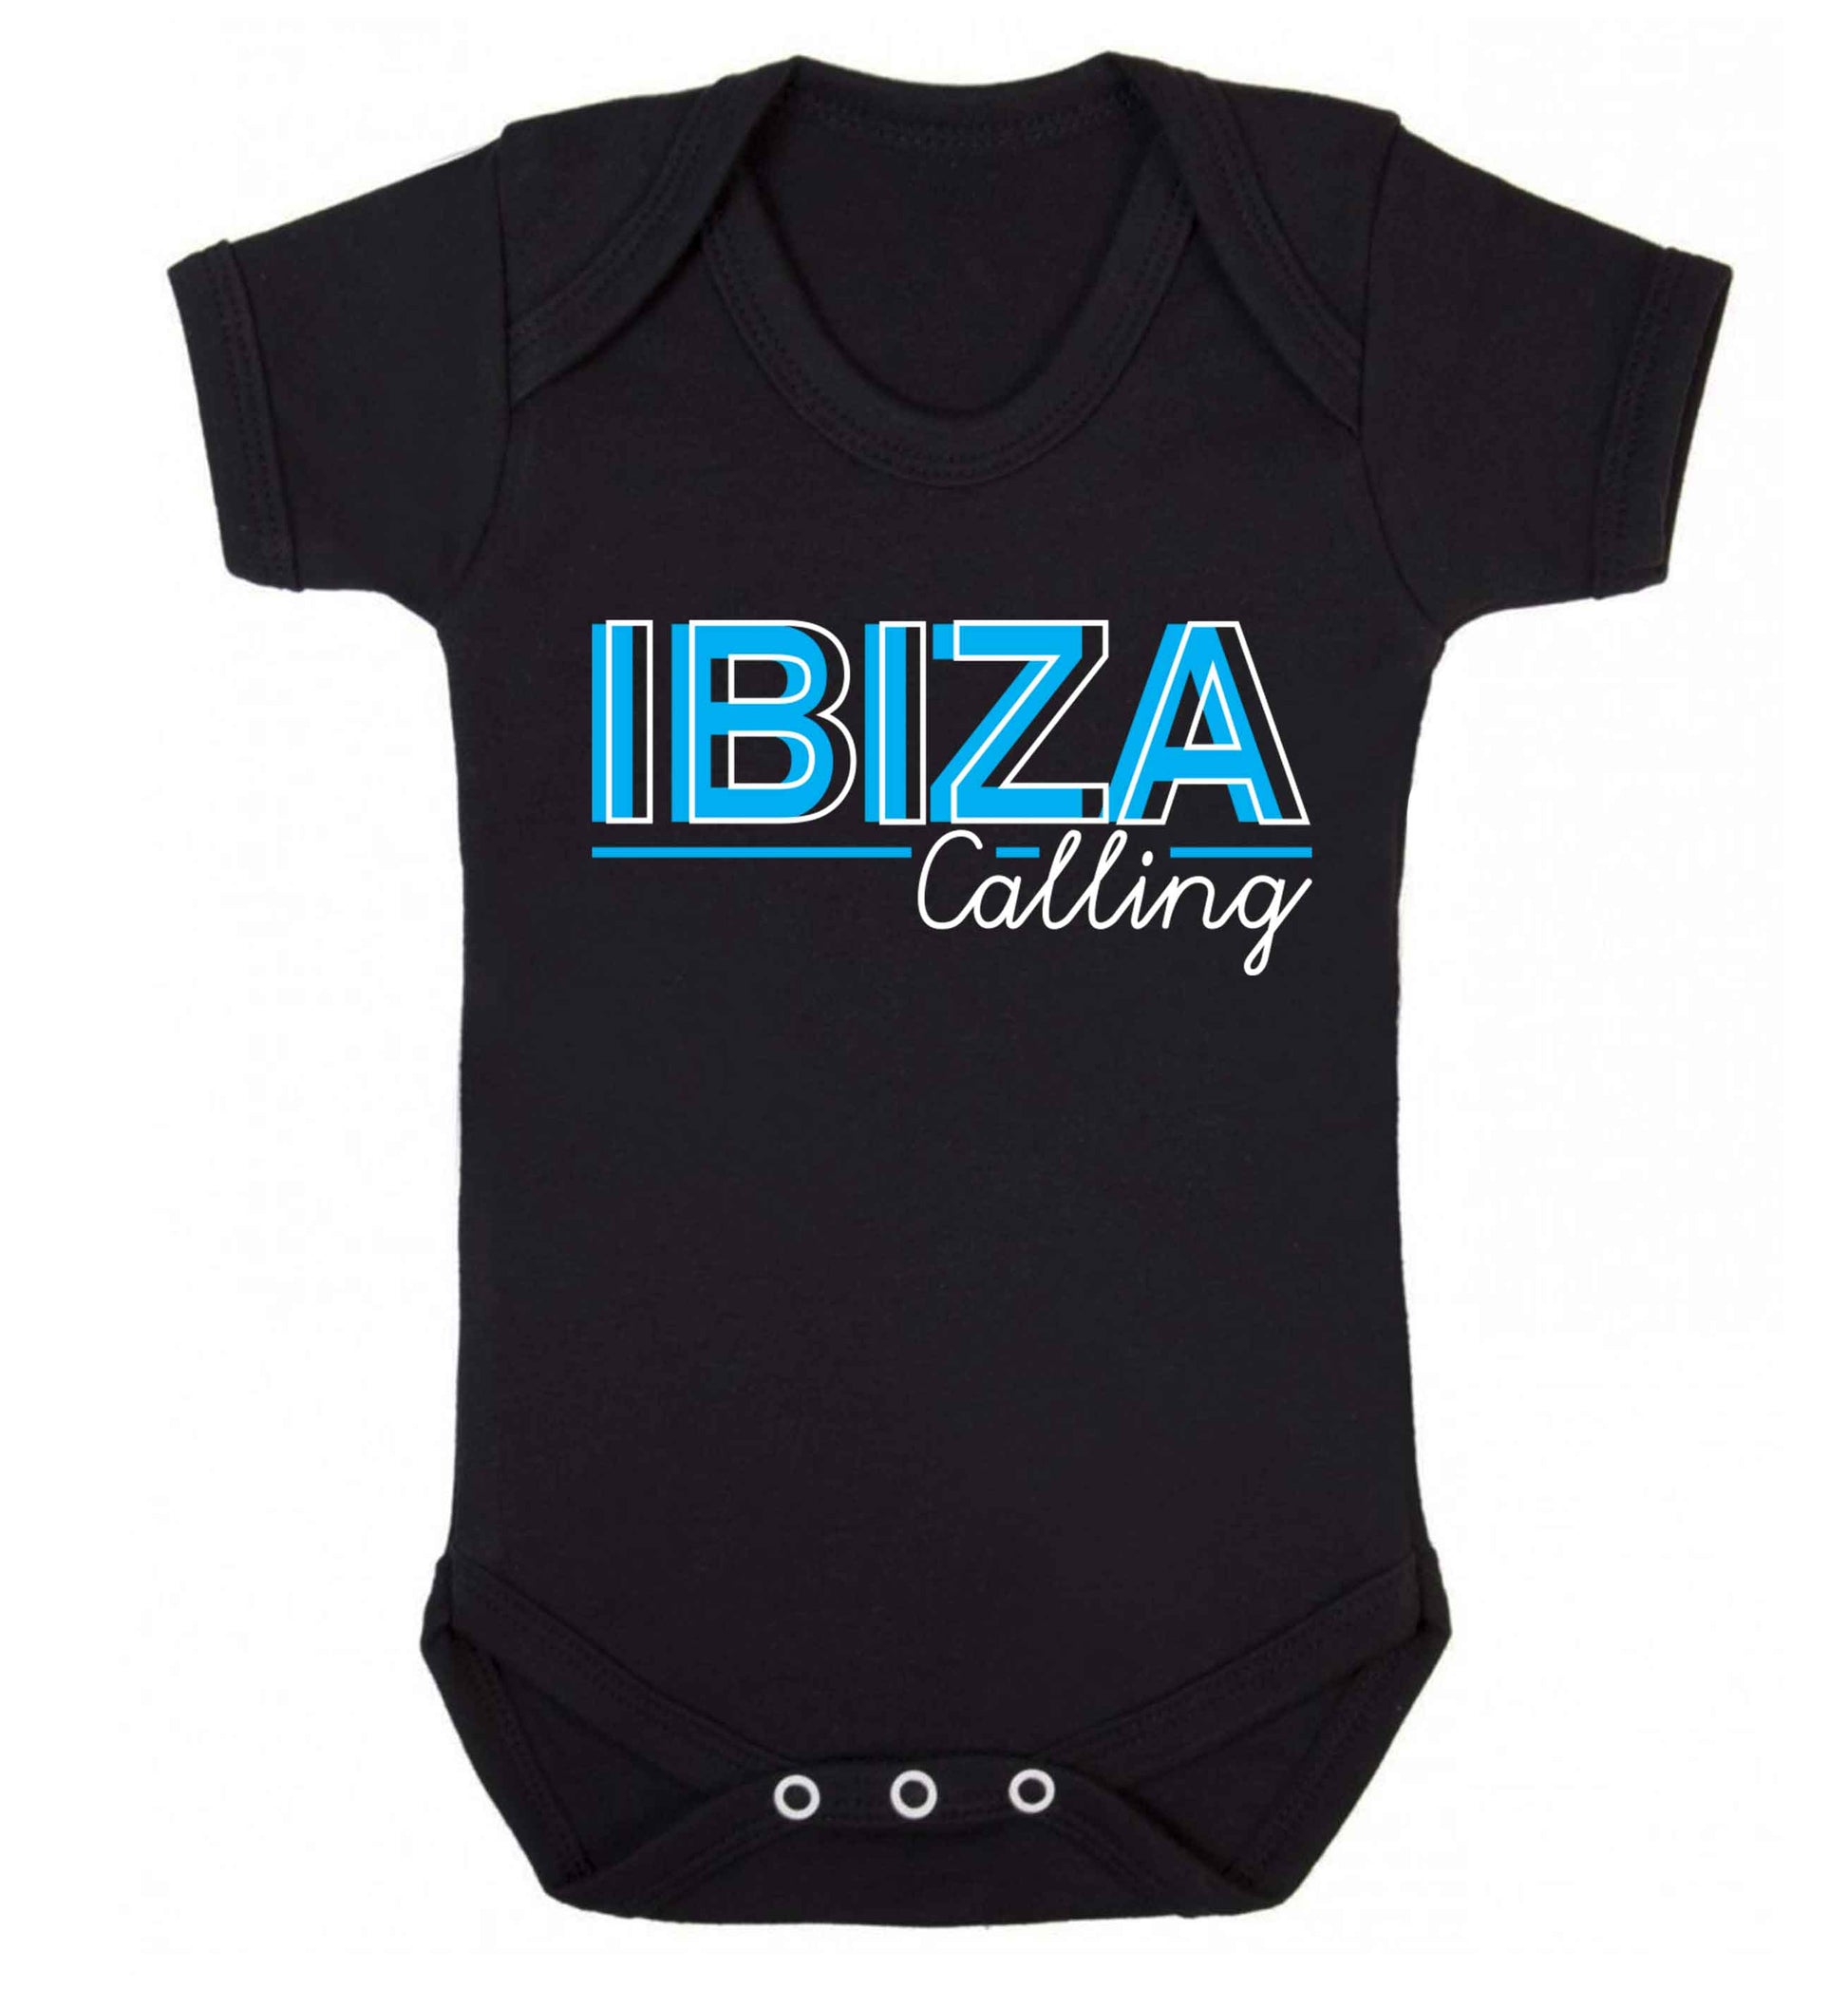 Ibiza calling Baby Vest black 18-24 months